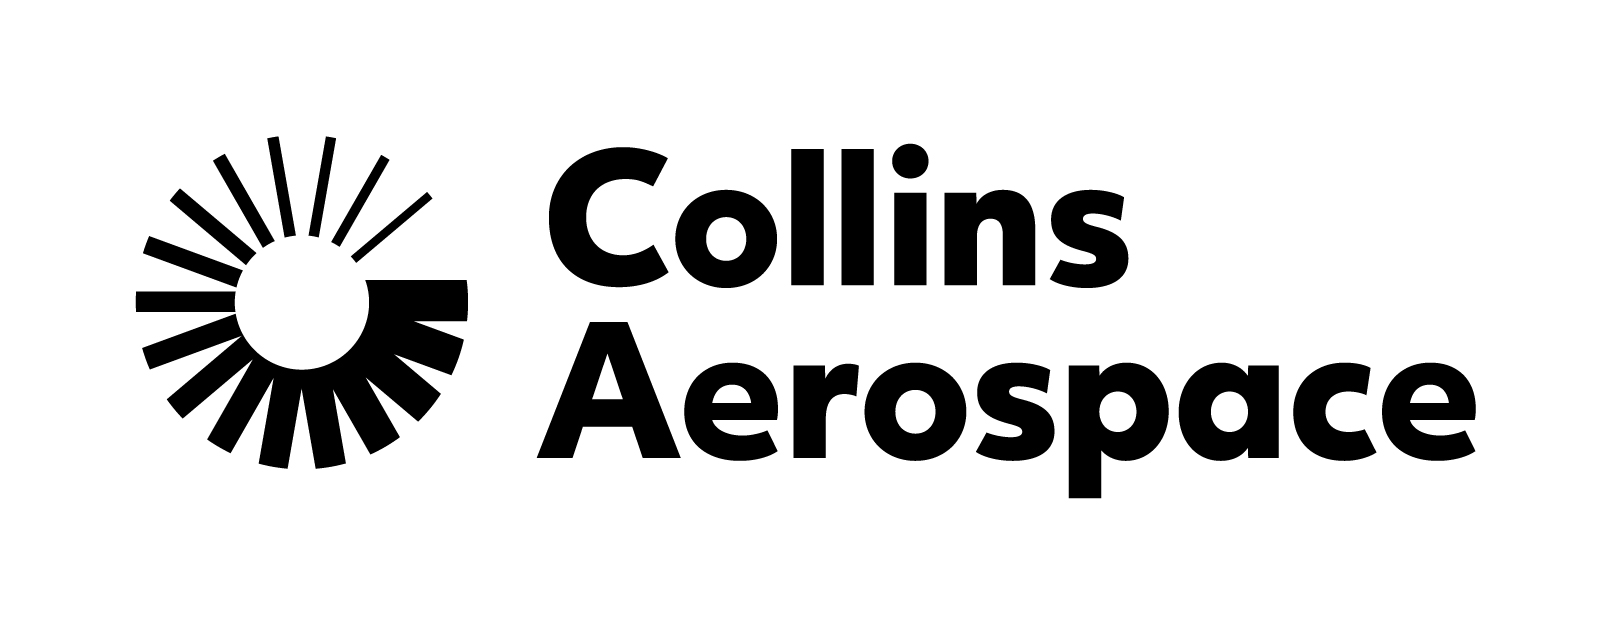 Collins aerospace logo stack k rgb